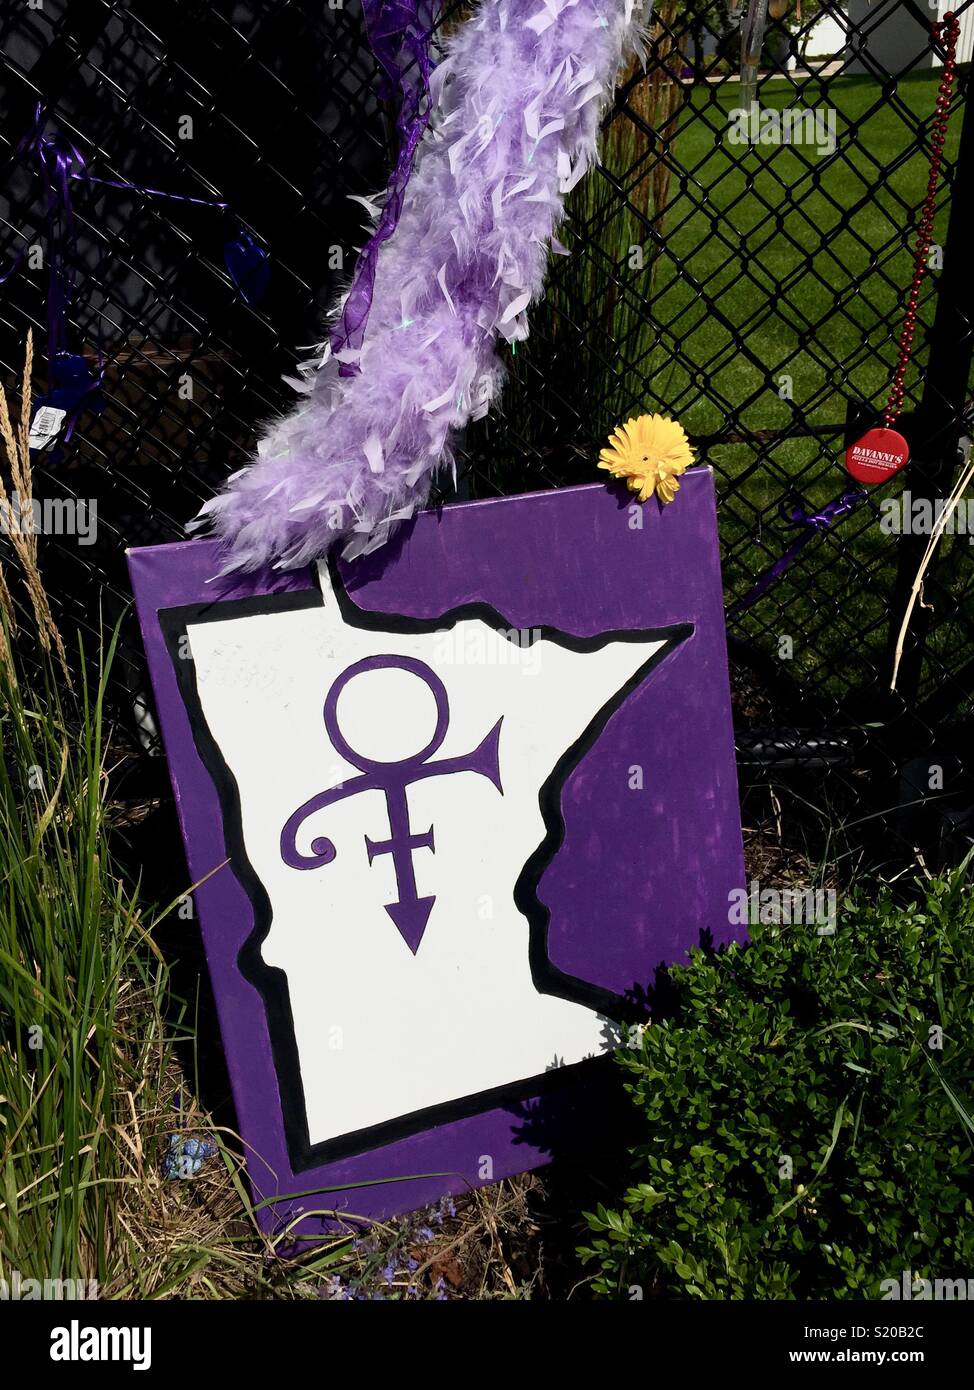 Prince memorial painting at Paisley Park, Chanhassen, Minnesota, USA. Stock Photo